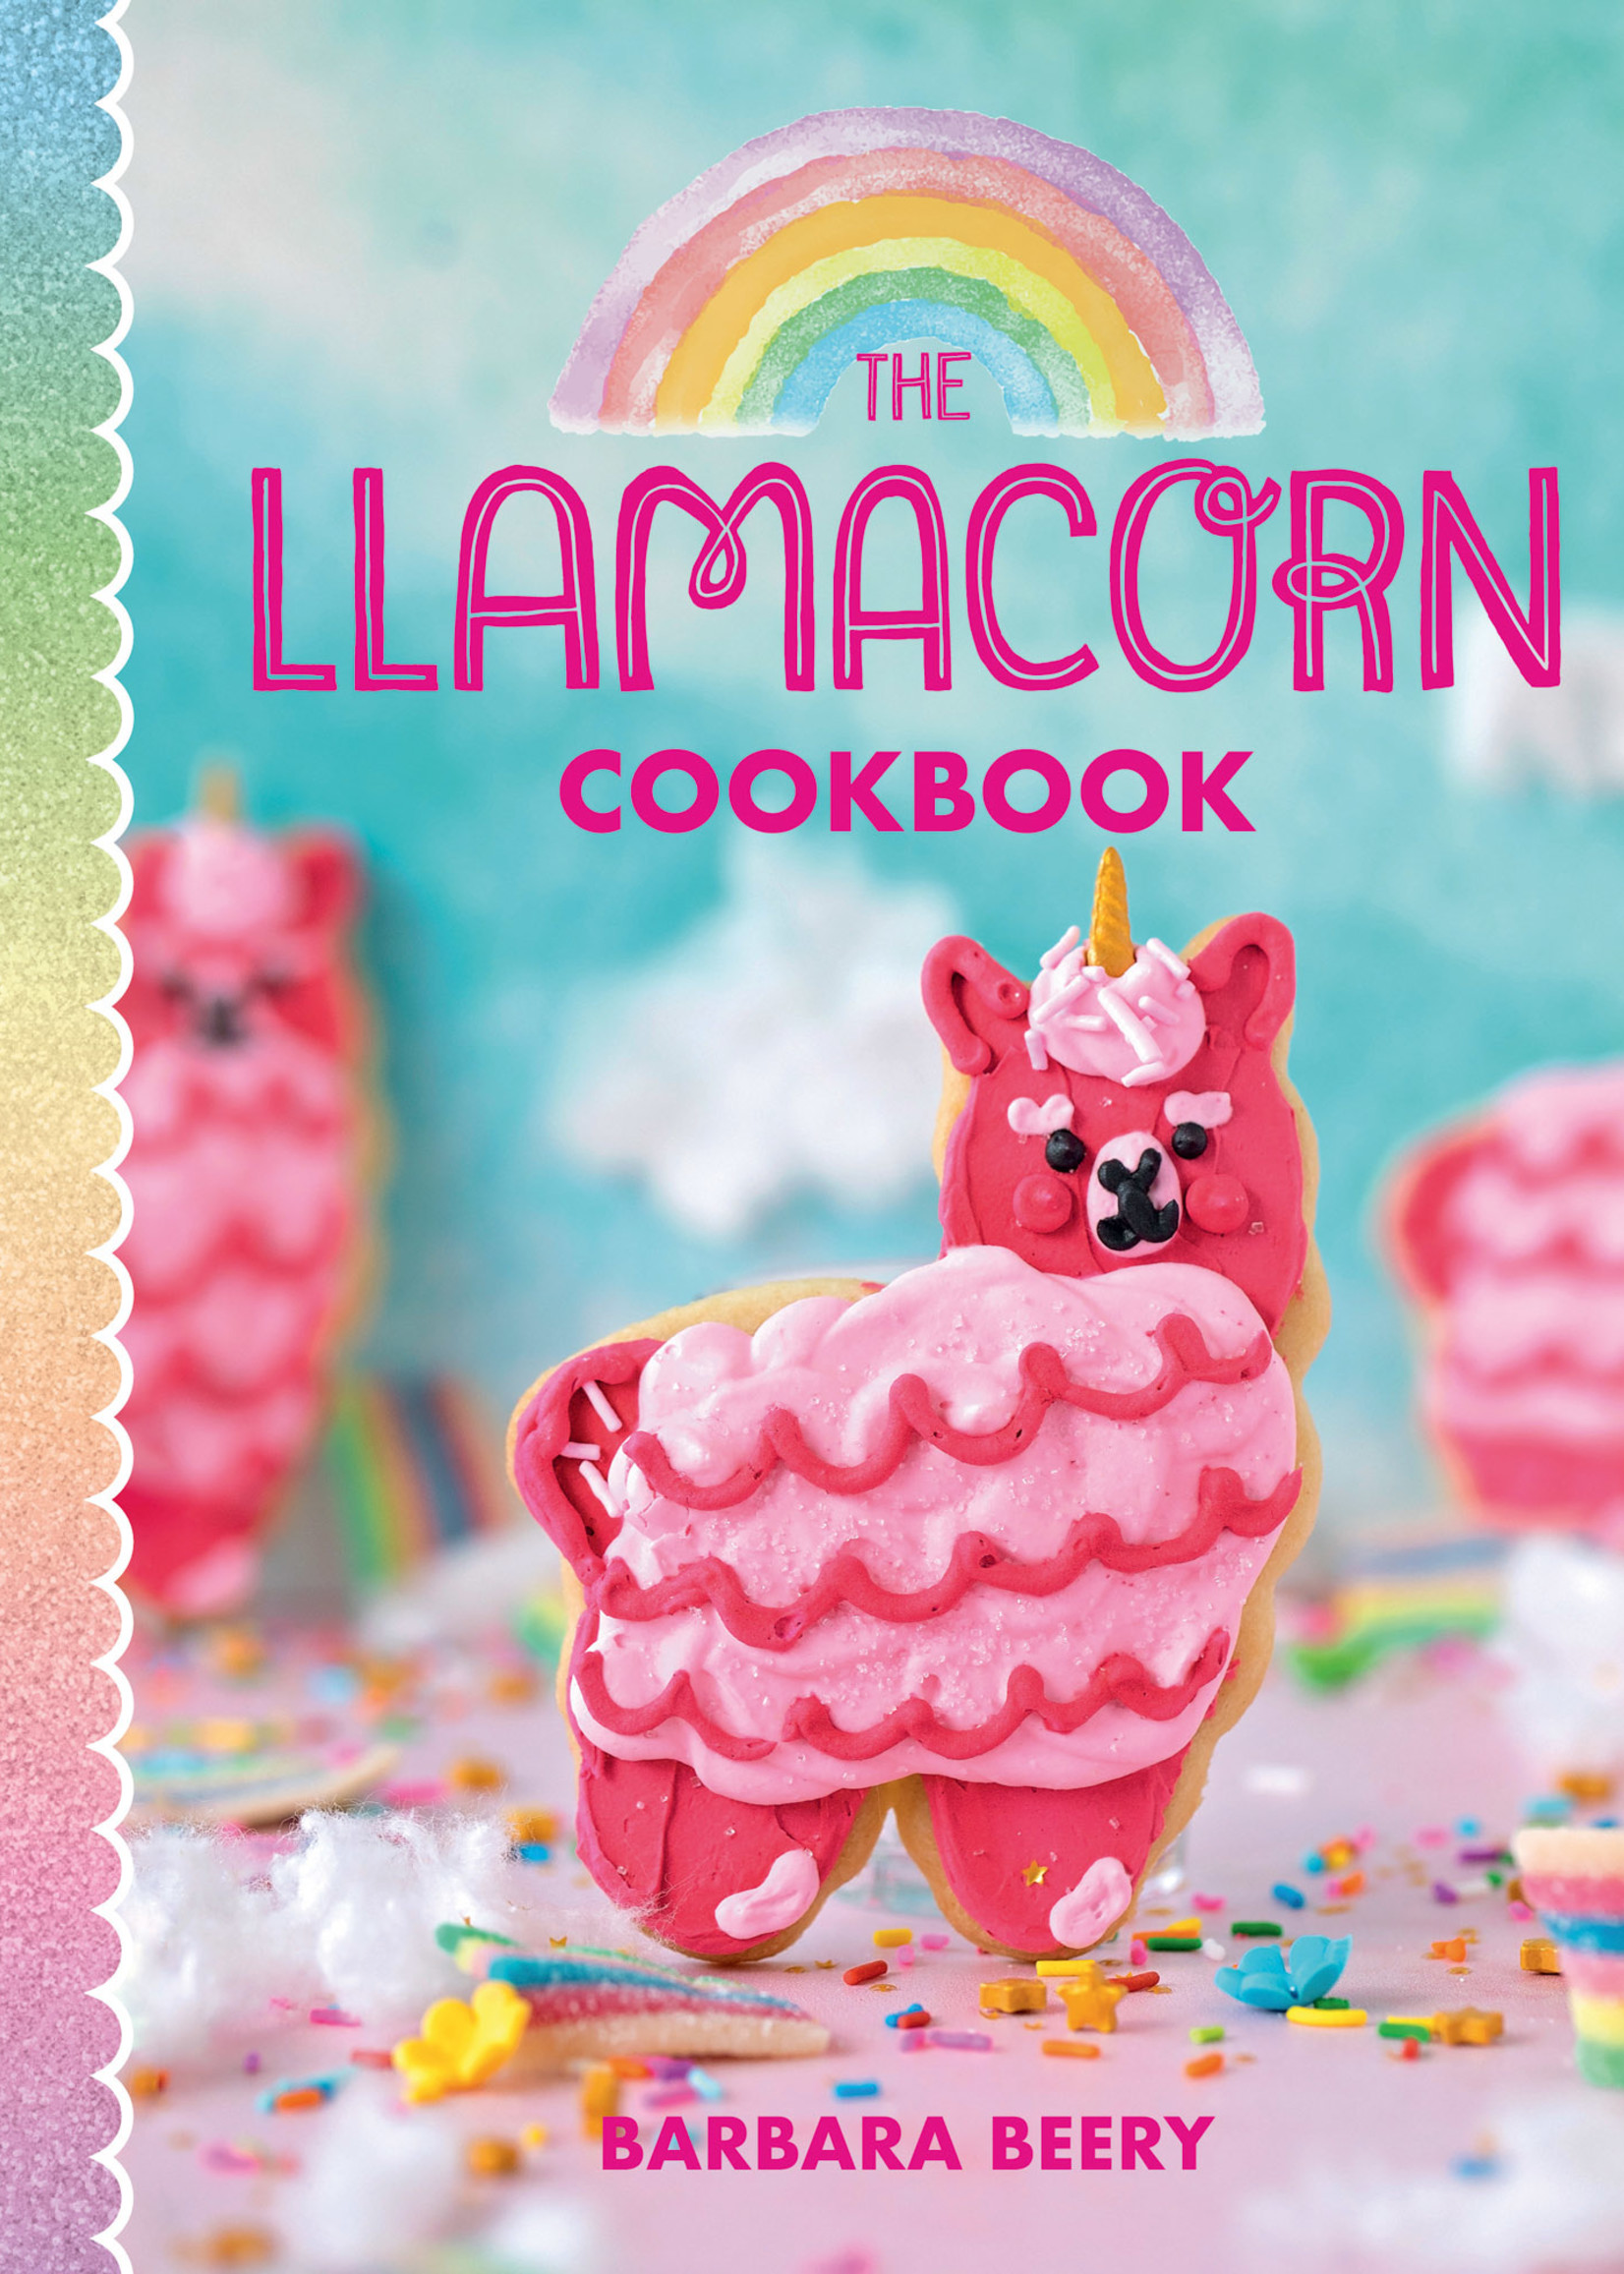 The Llamacorn Cookbook by Barbara Beery